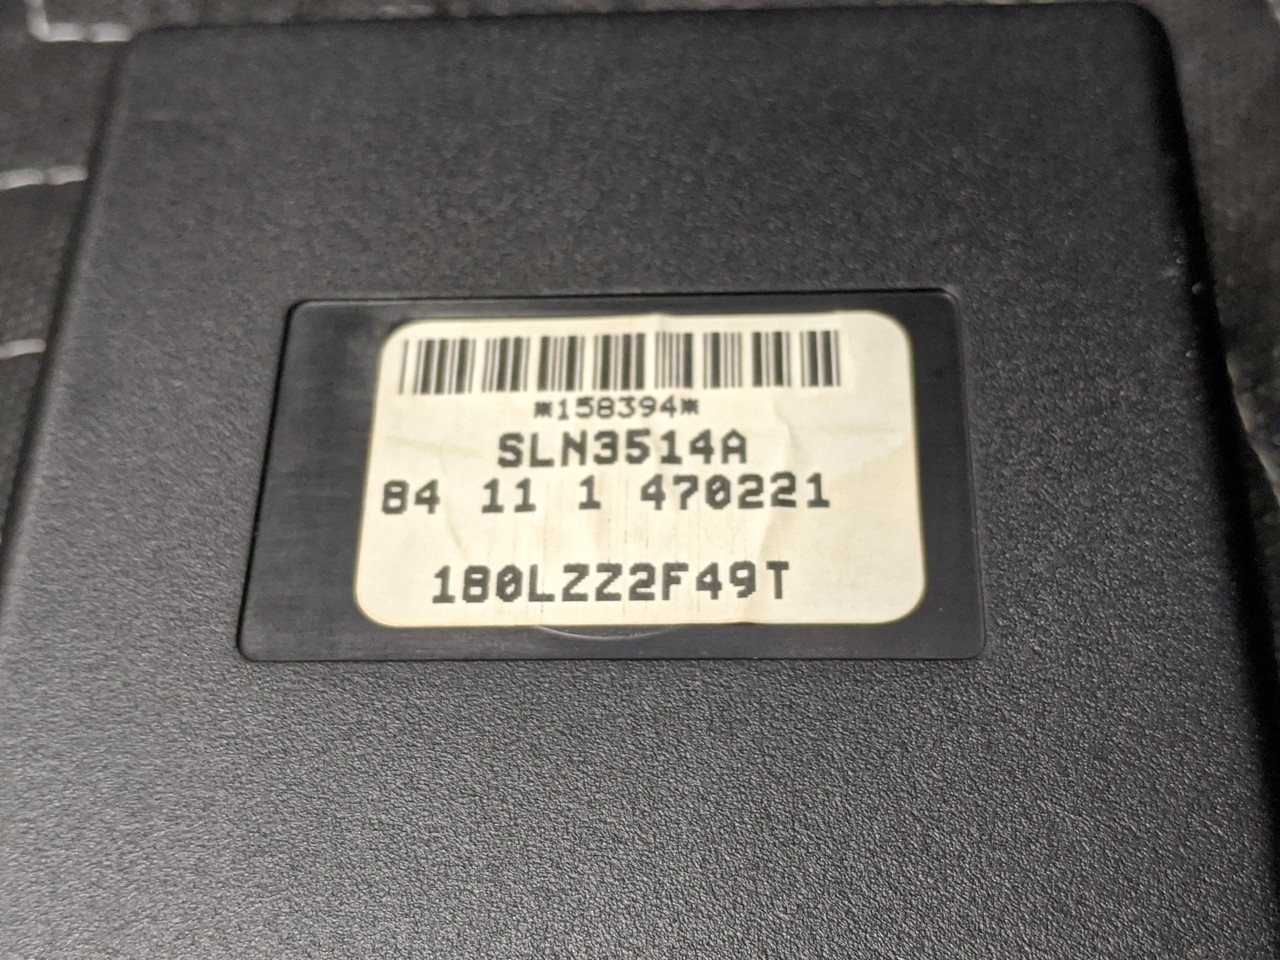 BMW E39 5-Series Phone Transmitter Receiver PSE Module 84111470221